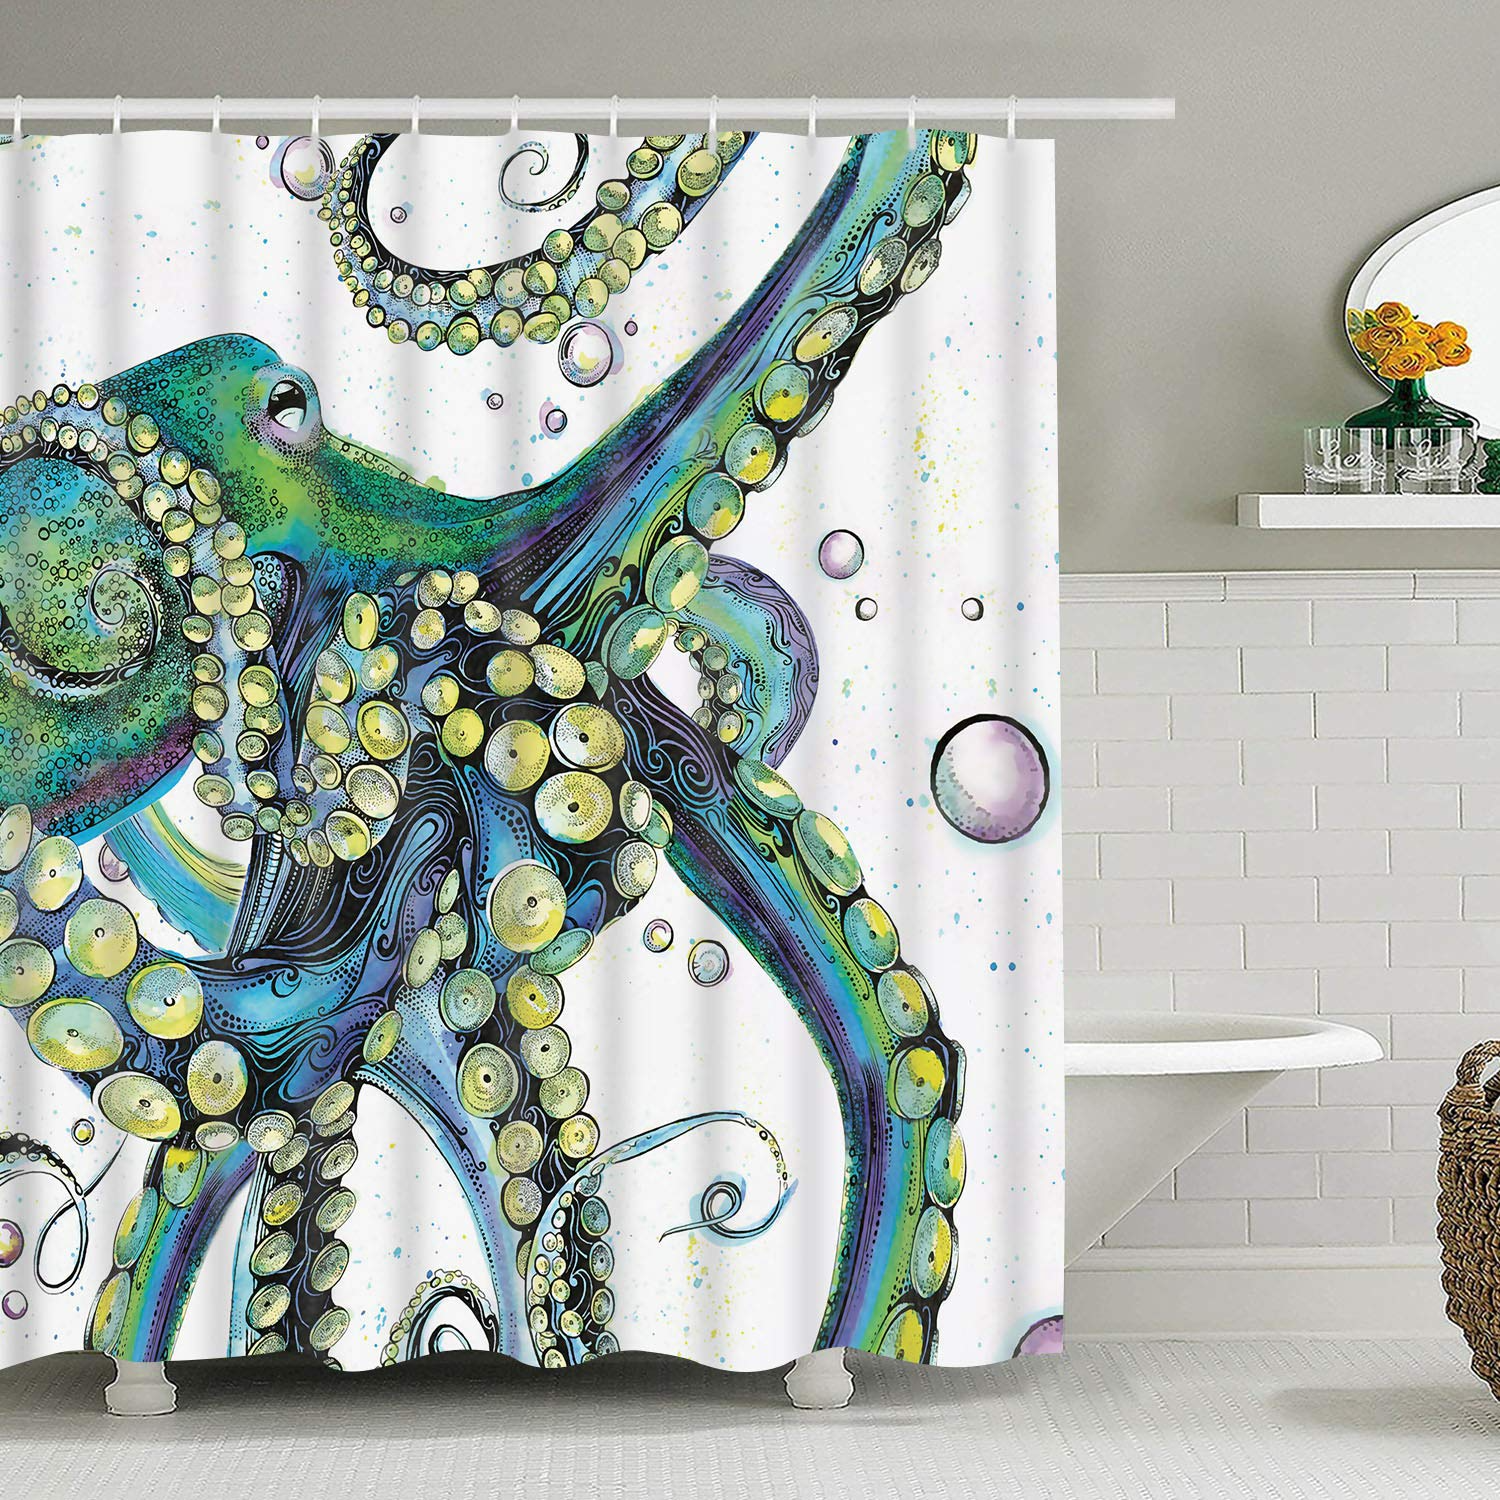 Bathroom Fabric Shower Curtain Octopus tentacles 72x72 12 Hooks & Bath Mat 8115 